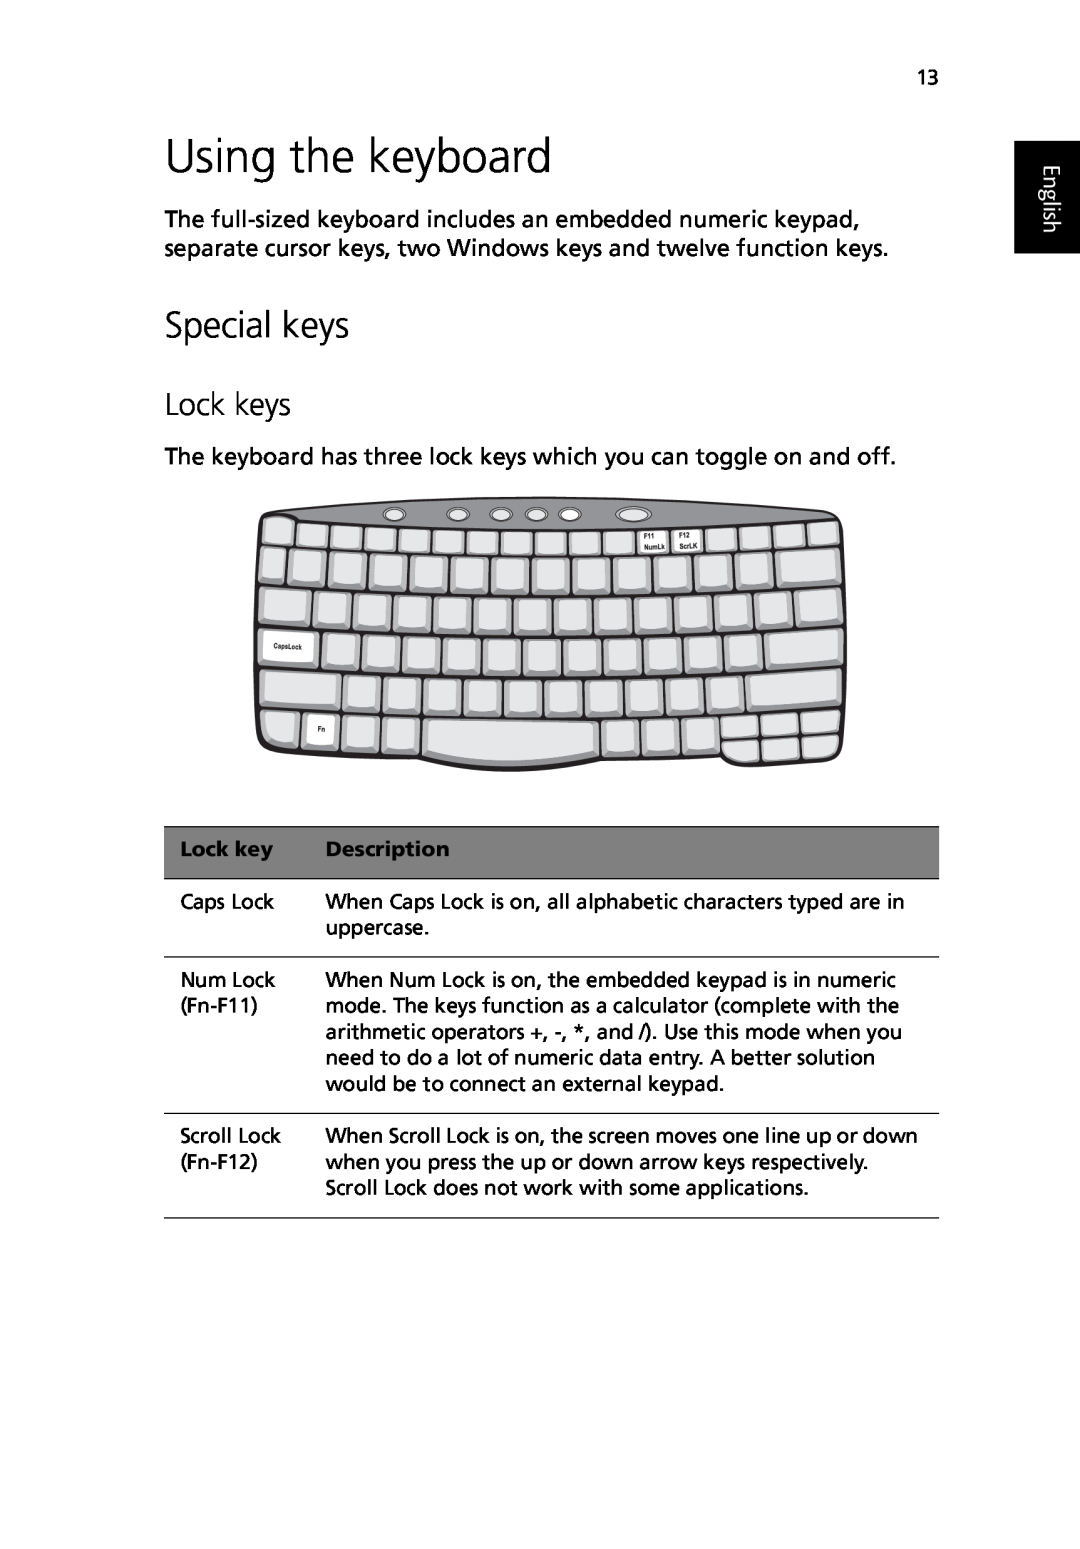 Acer TravelMate 530 manual Using the keyboard, Special keys, Lock keys, English, Description 